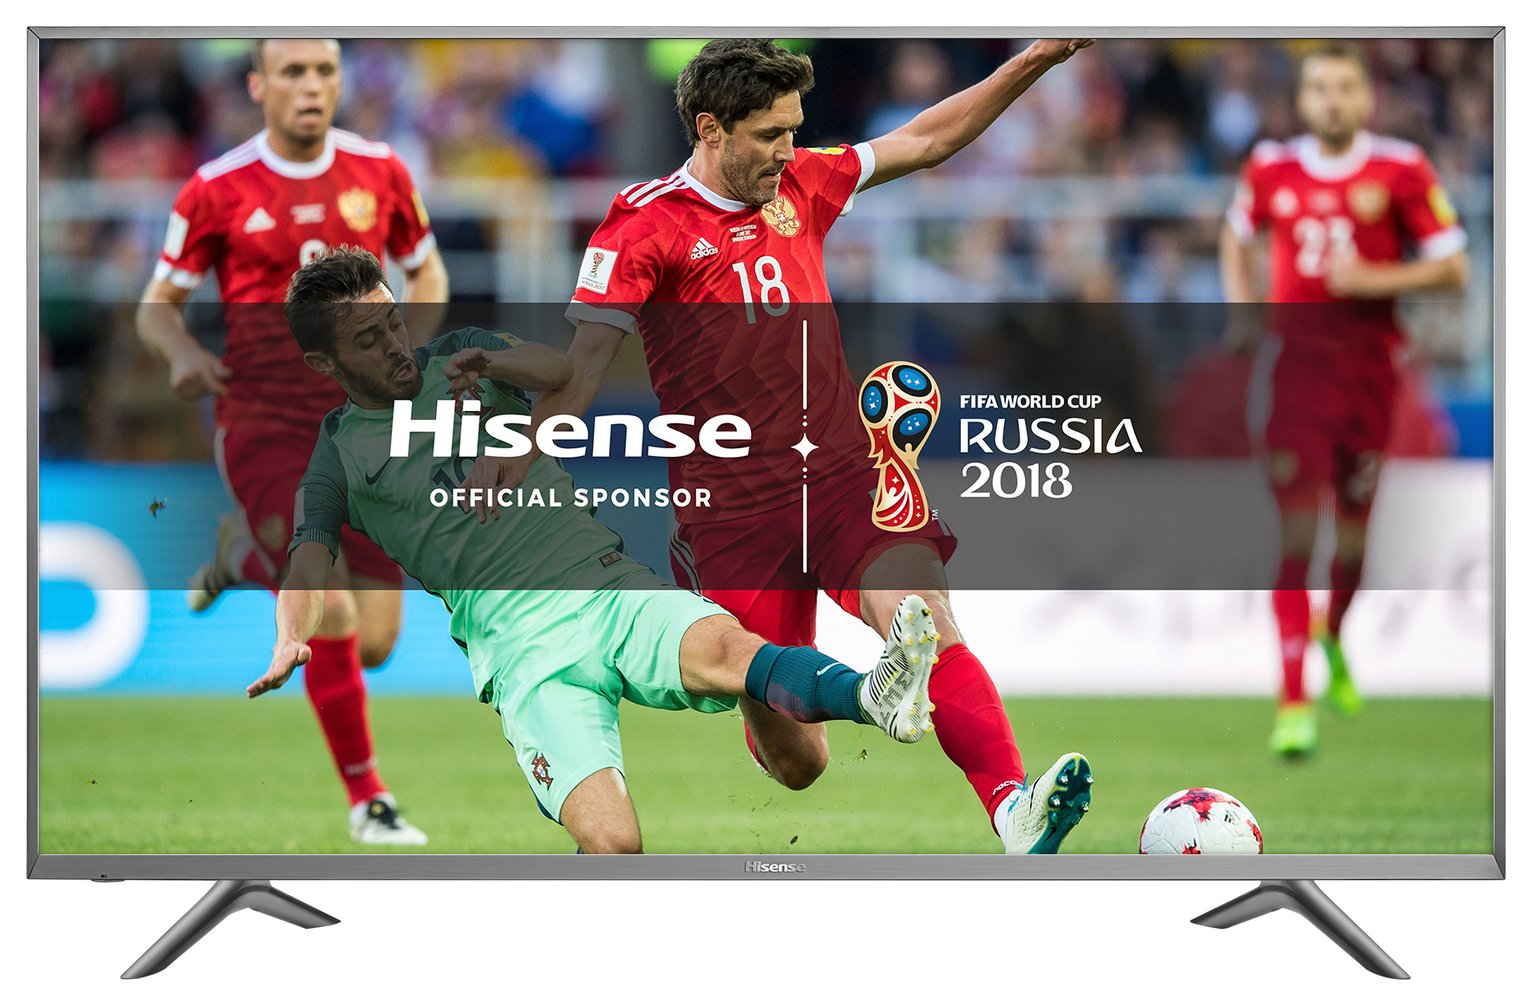 Hisense H65N5750 65 Inch 4K Ultra HD Smart TV with HDR.